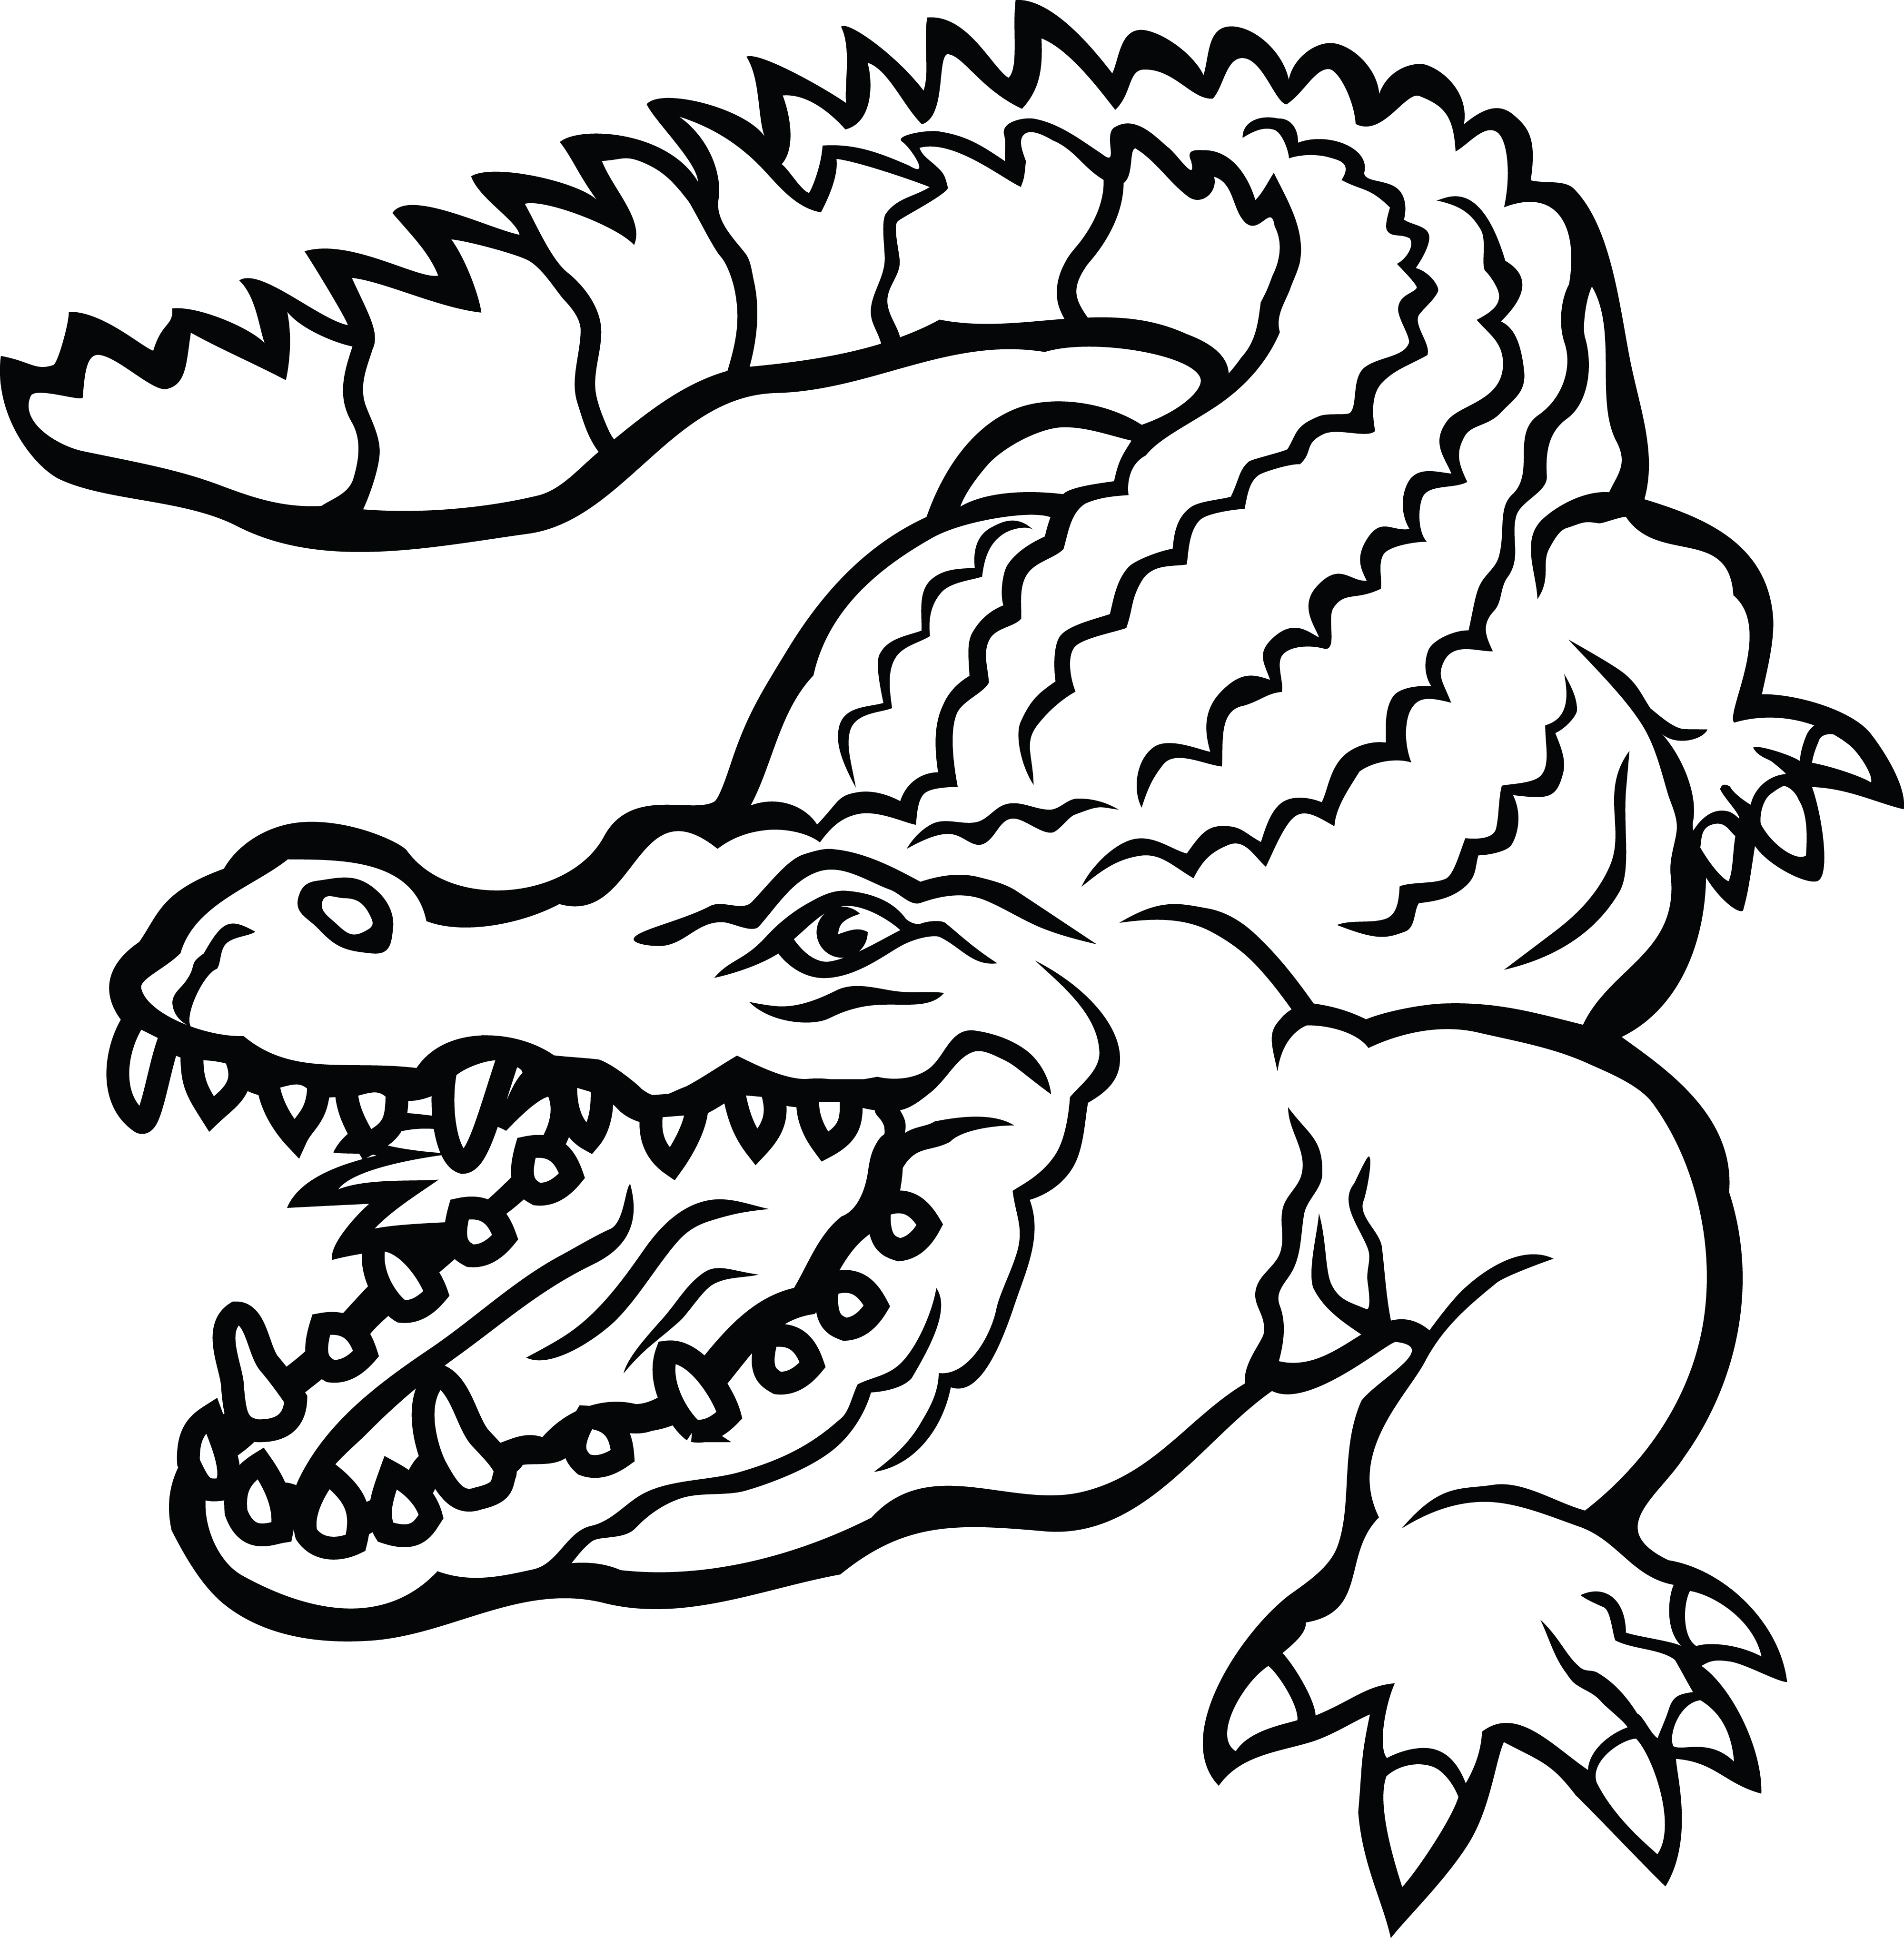 Crocodile clipart line art. Black and white free